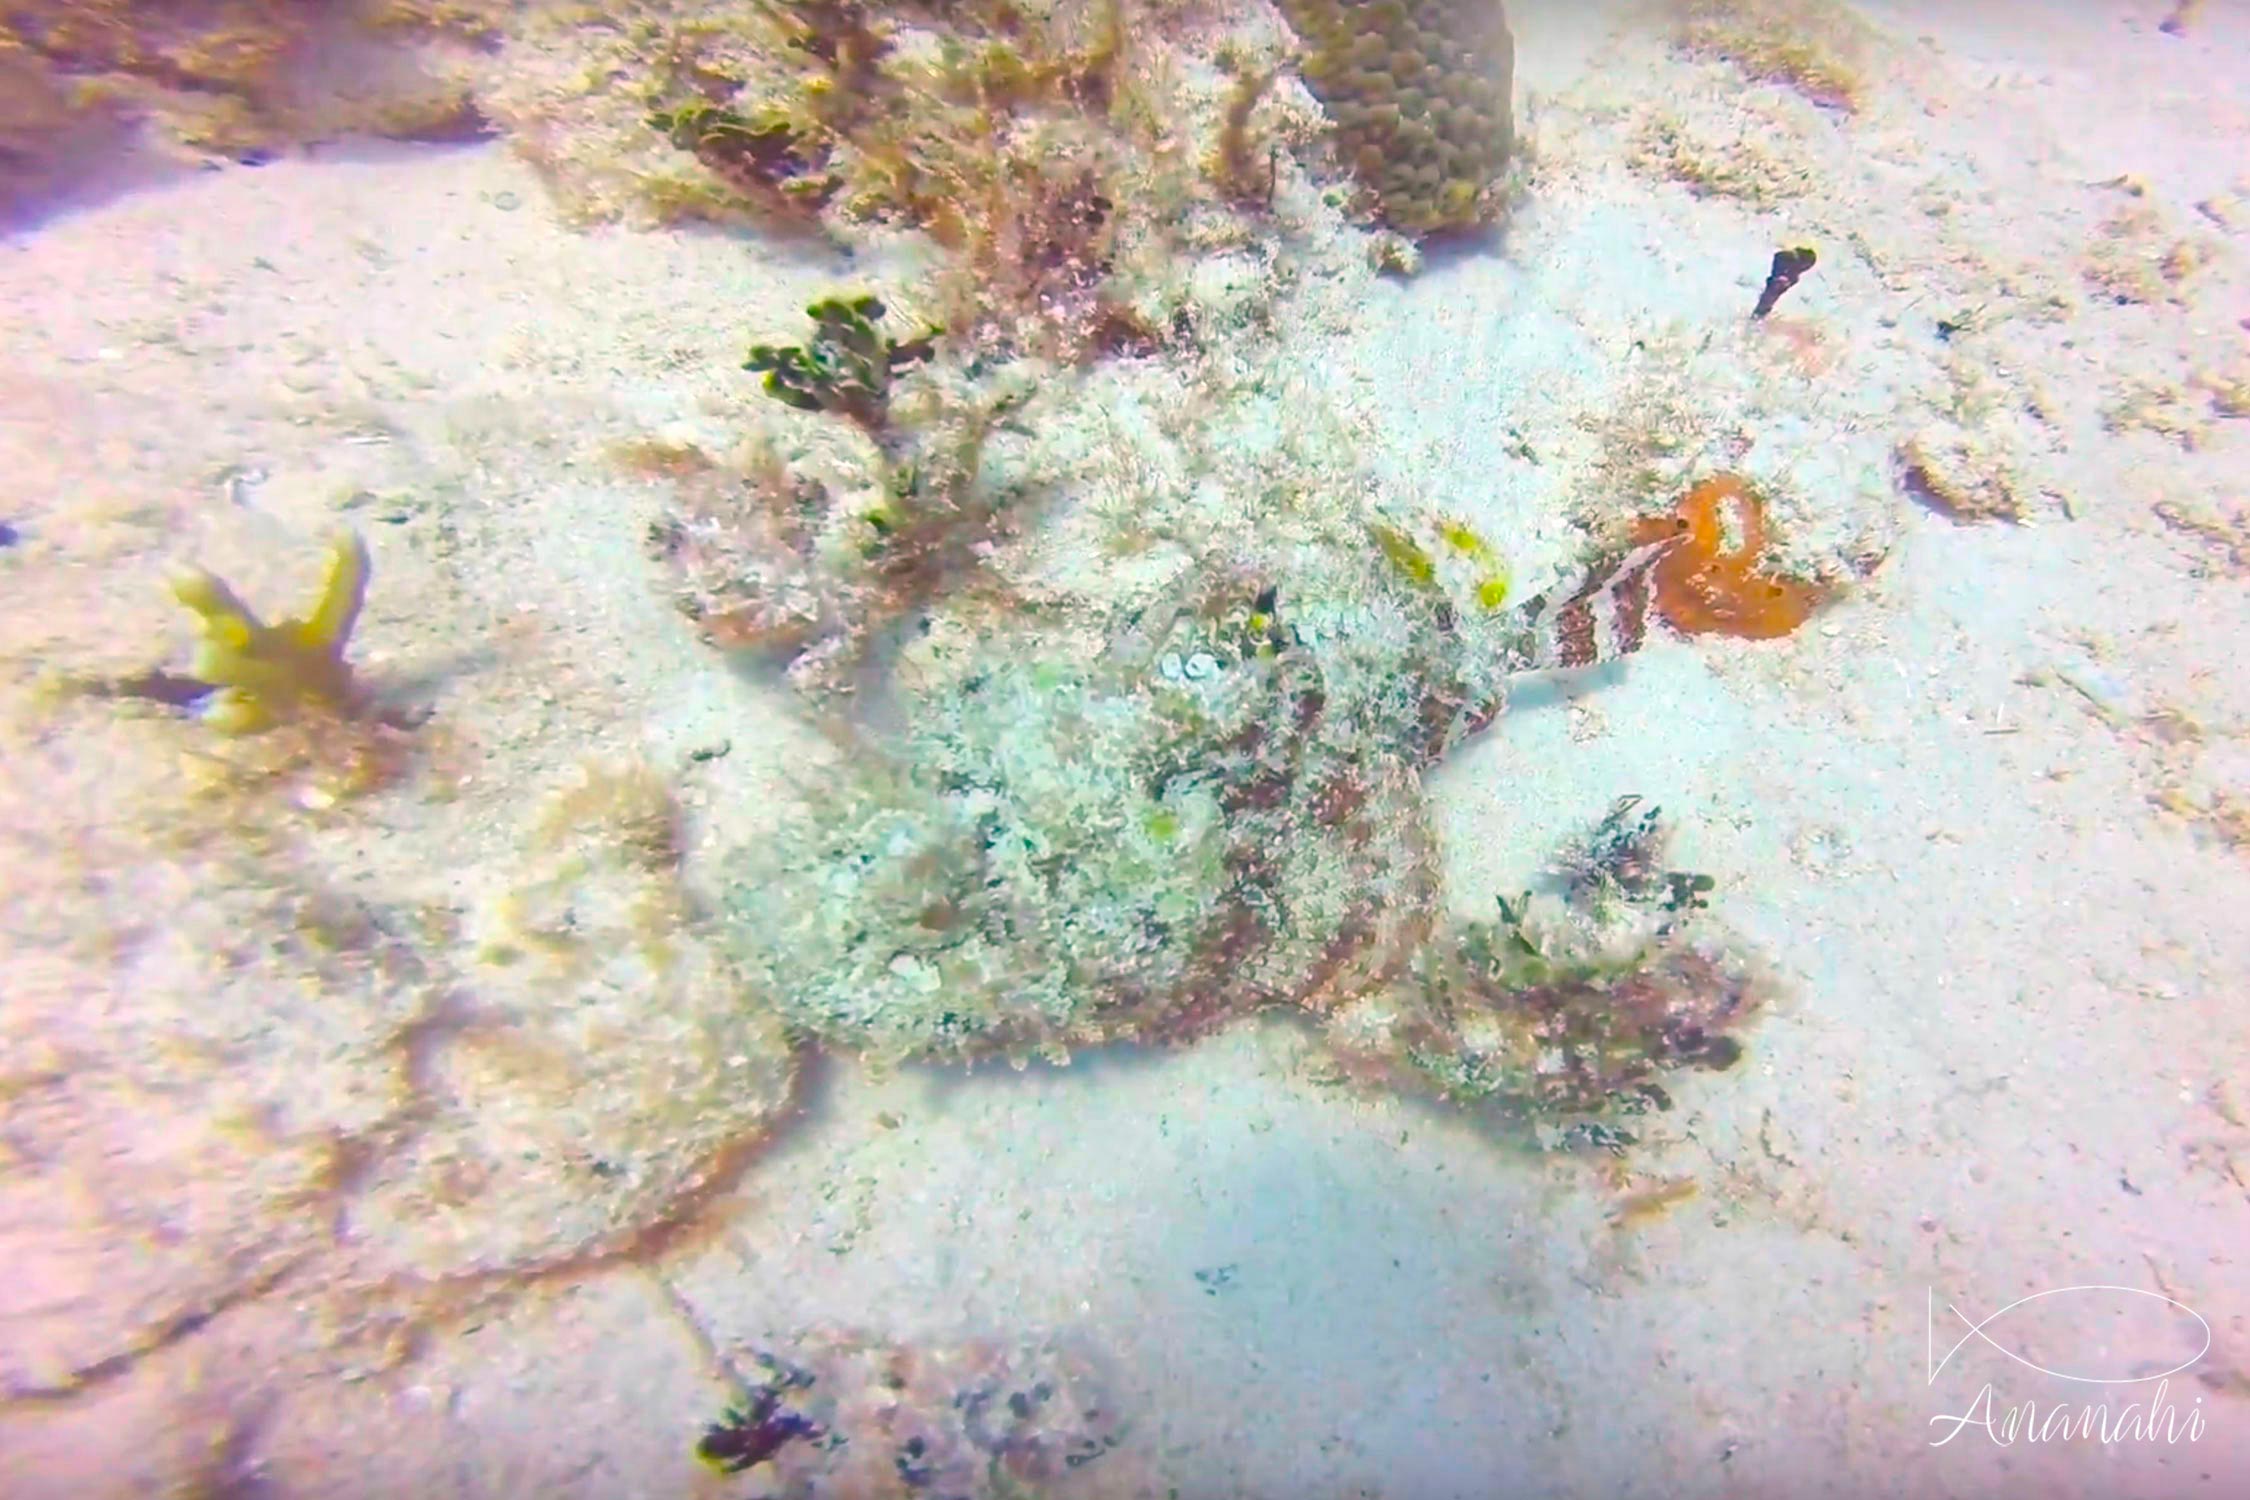 Tasseled scorpionfish of Mexico